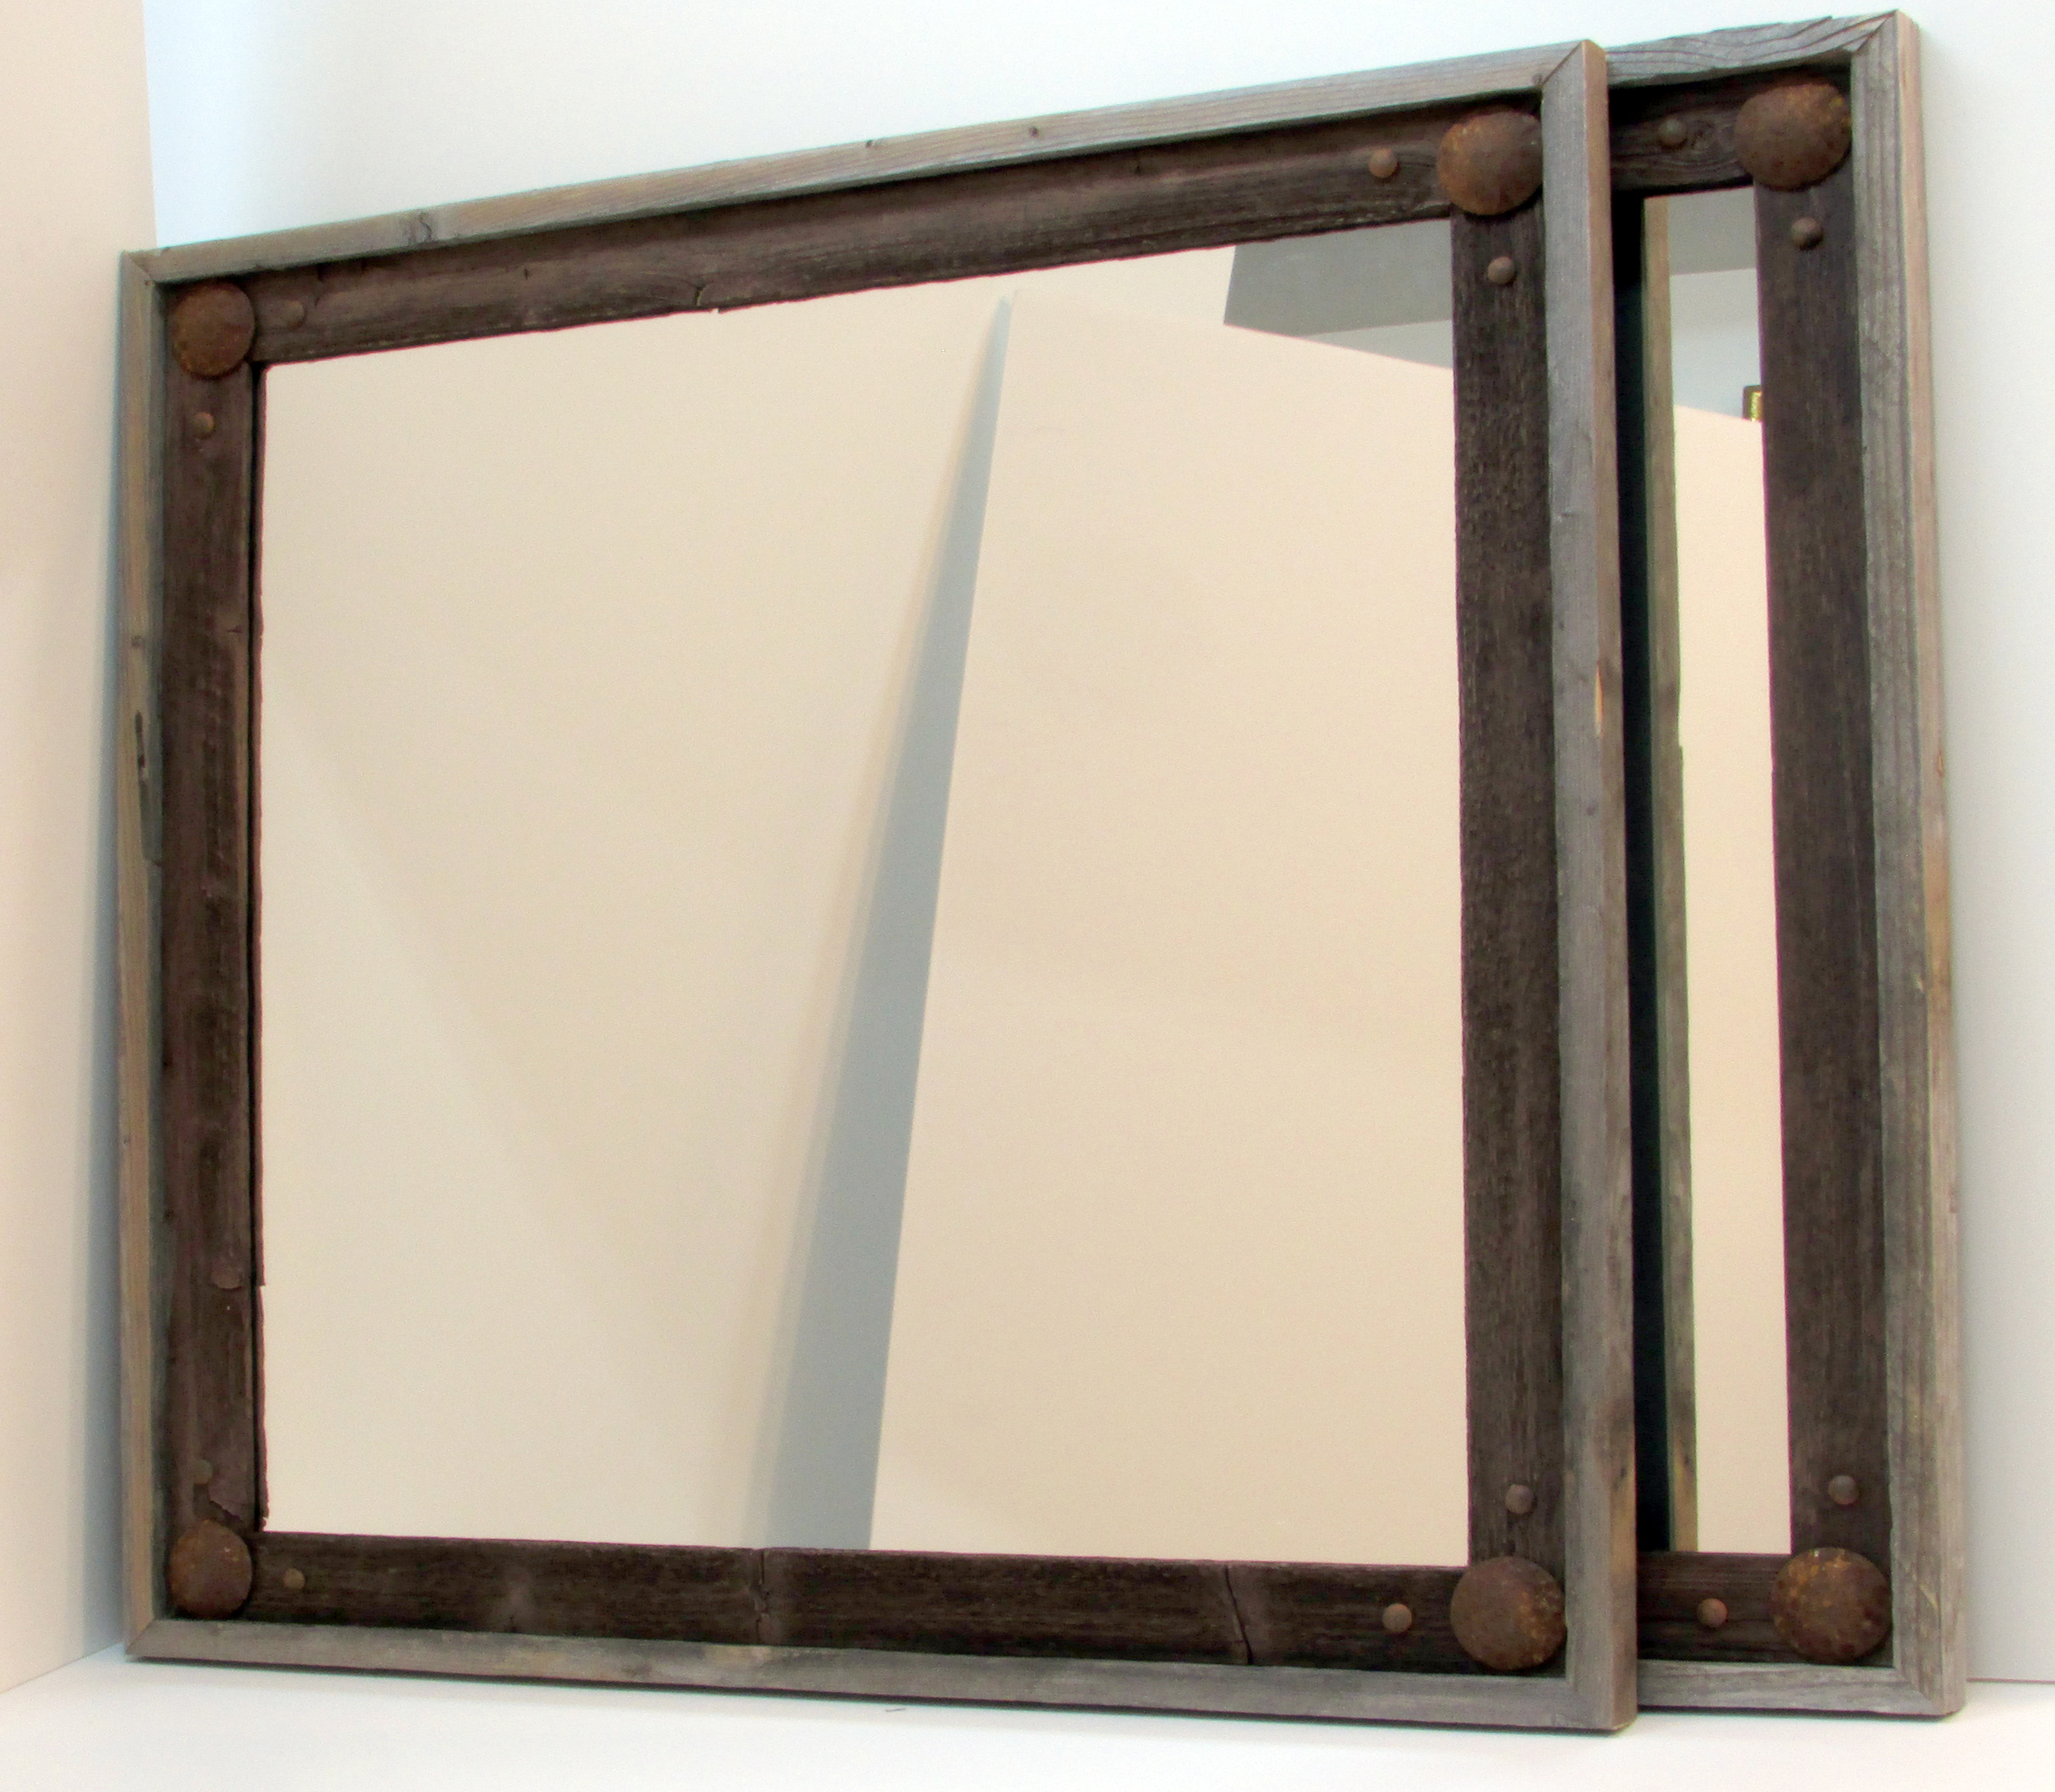 Rustic reclaimed wood mirror frames - The Frame and I Prescott Arizona